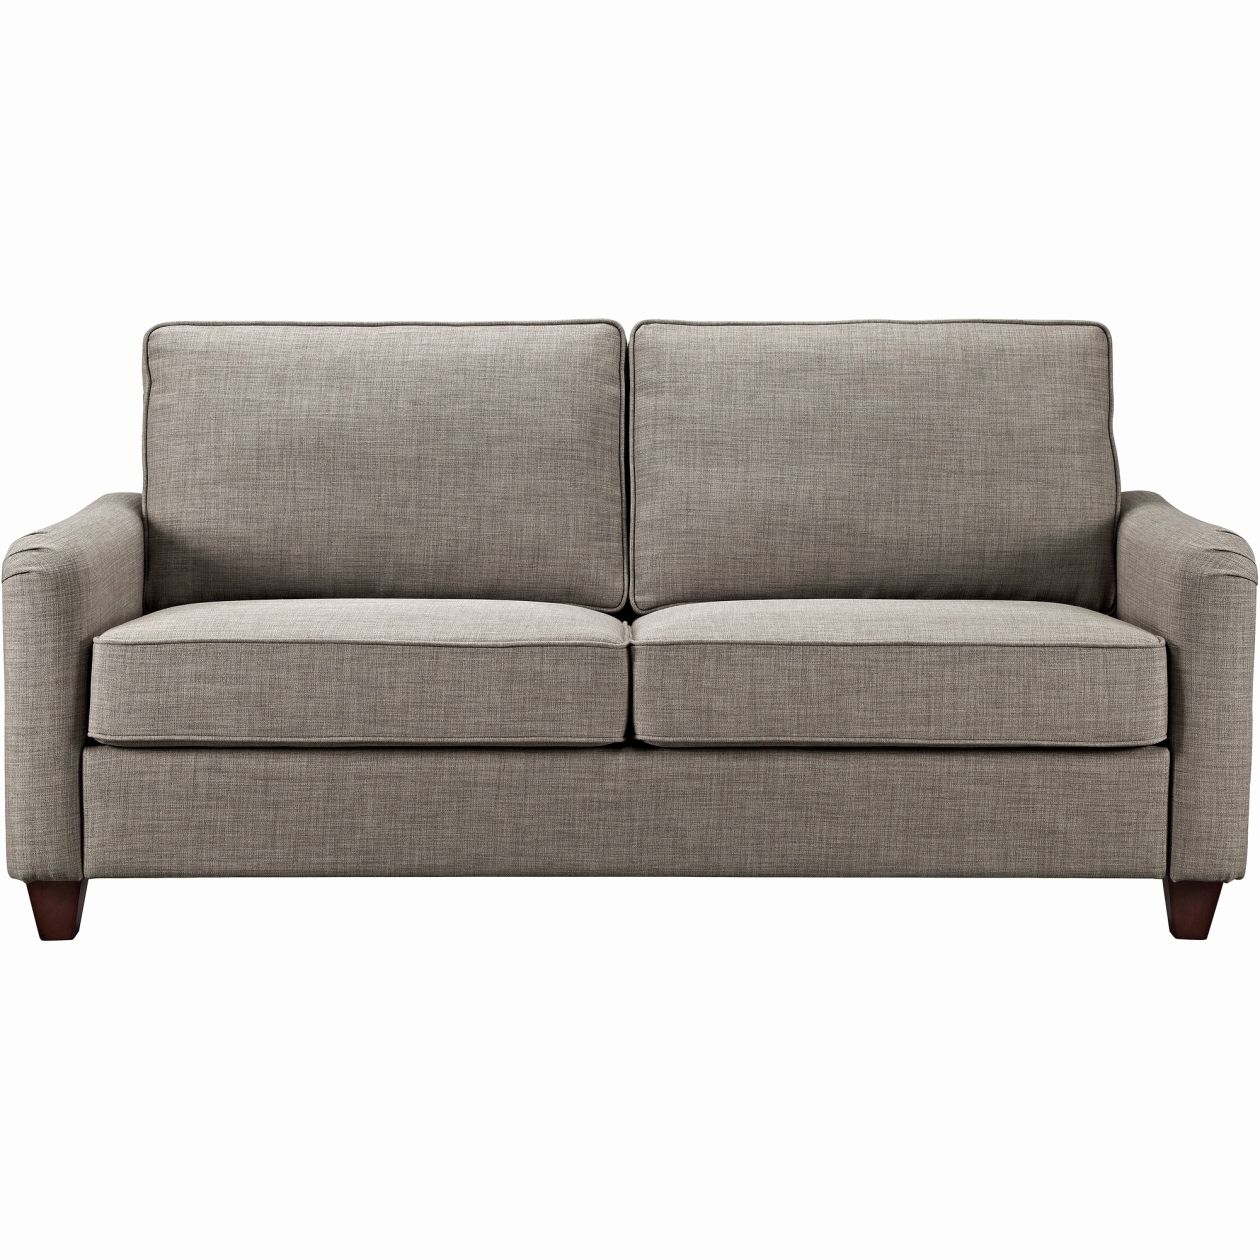 El Dorado Furniture Living Room Sets Supreme Queen Size Sofa Bed Intended For Most Recent El Dorado Sectional Sofas (View 18 of 20)